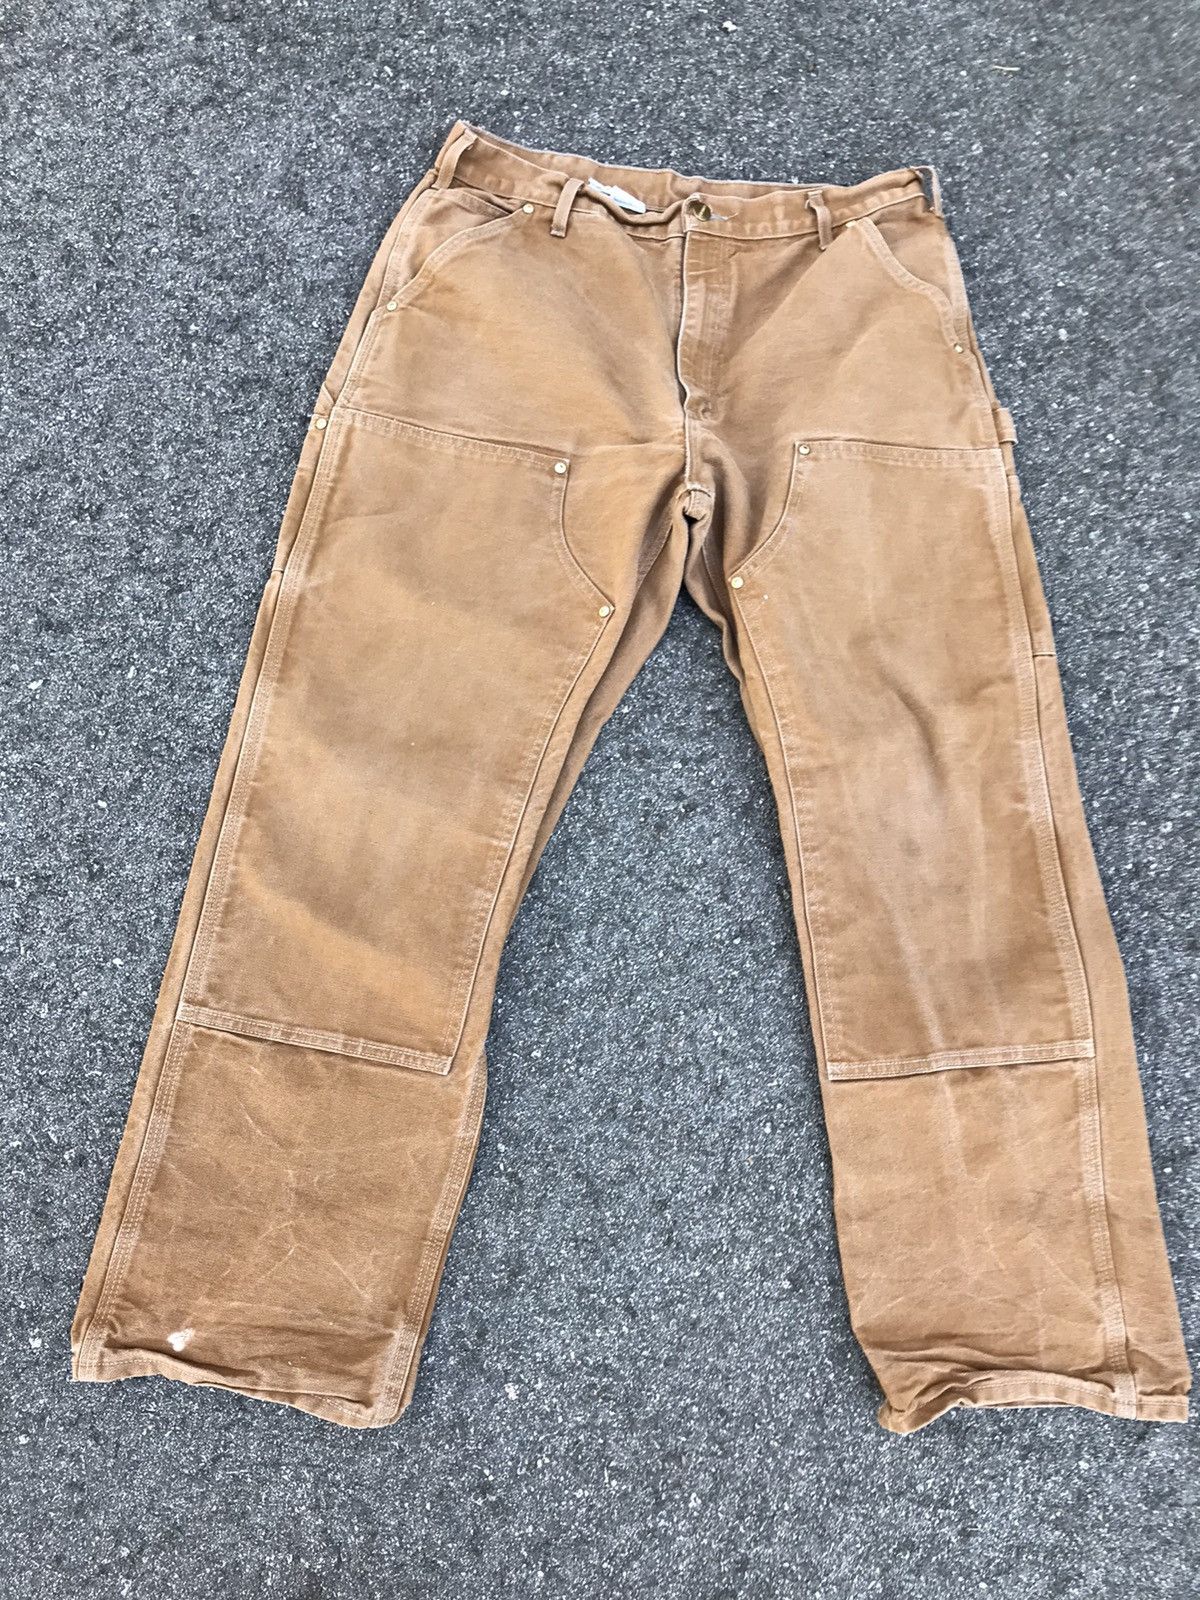 Vintage Carhart double knee 36 x 30 Cargo pants denim jean USA Size US 36 / EU 52 - 1 Preview